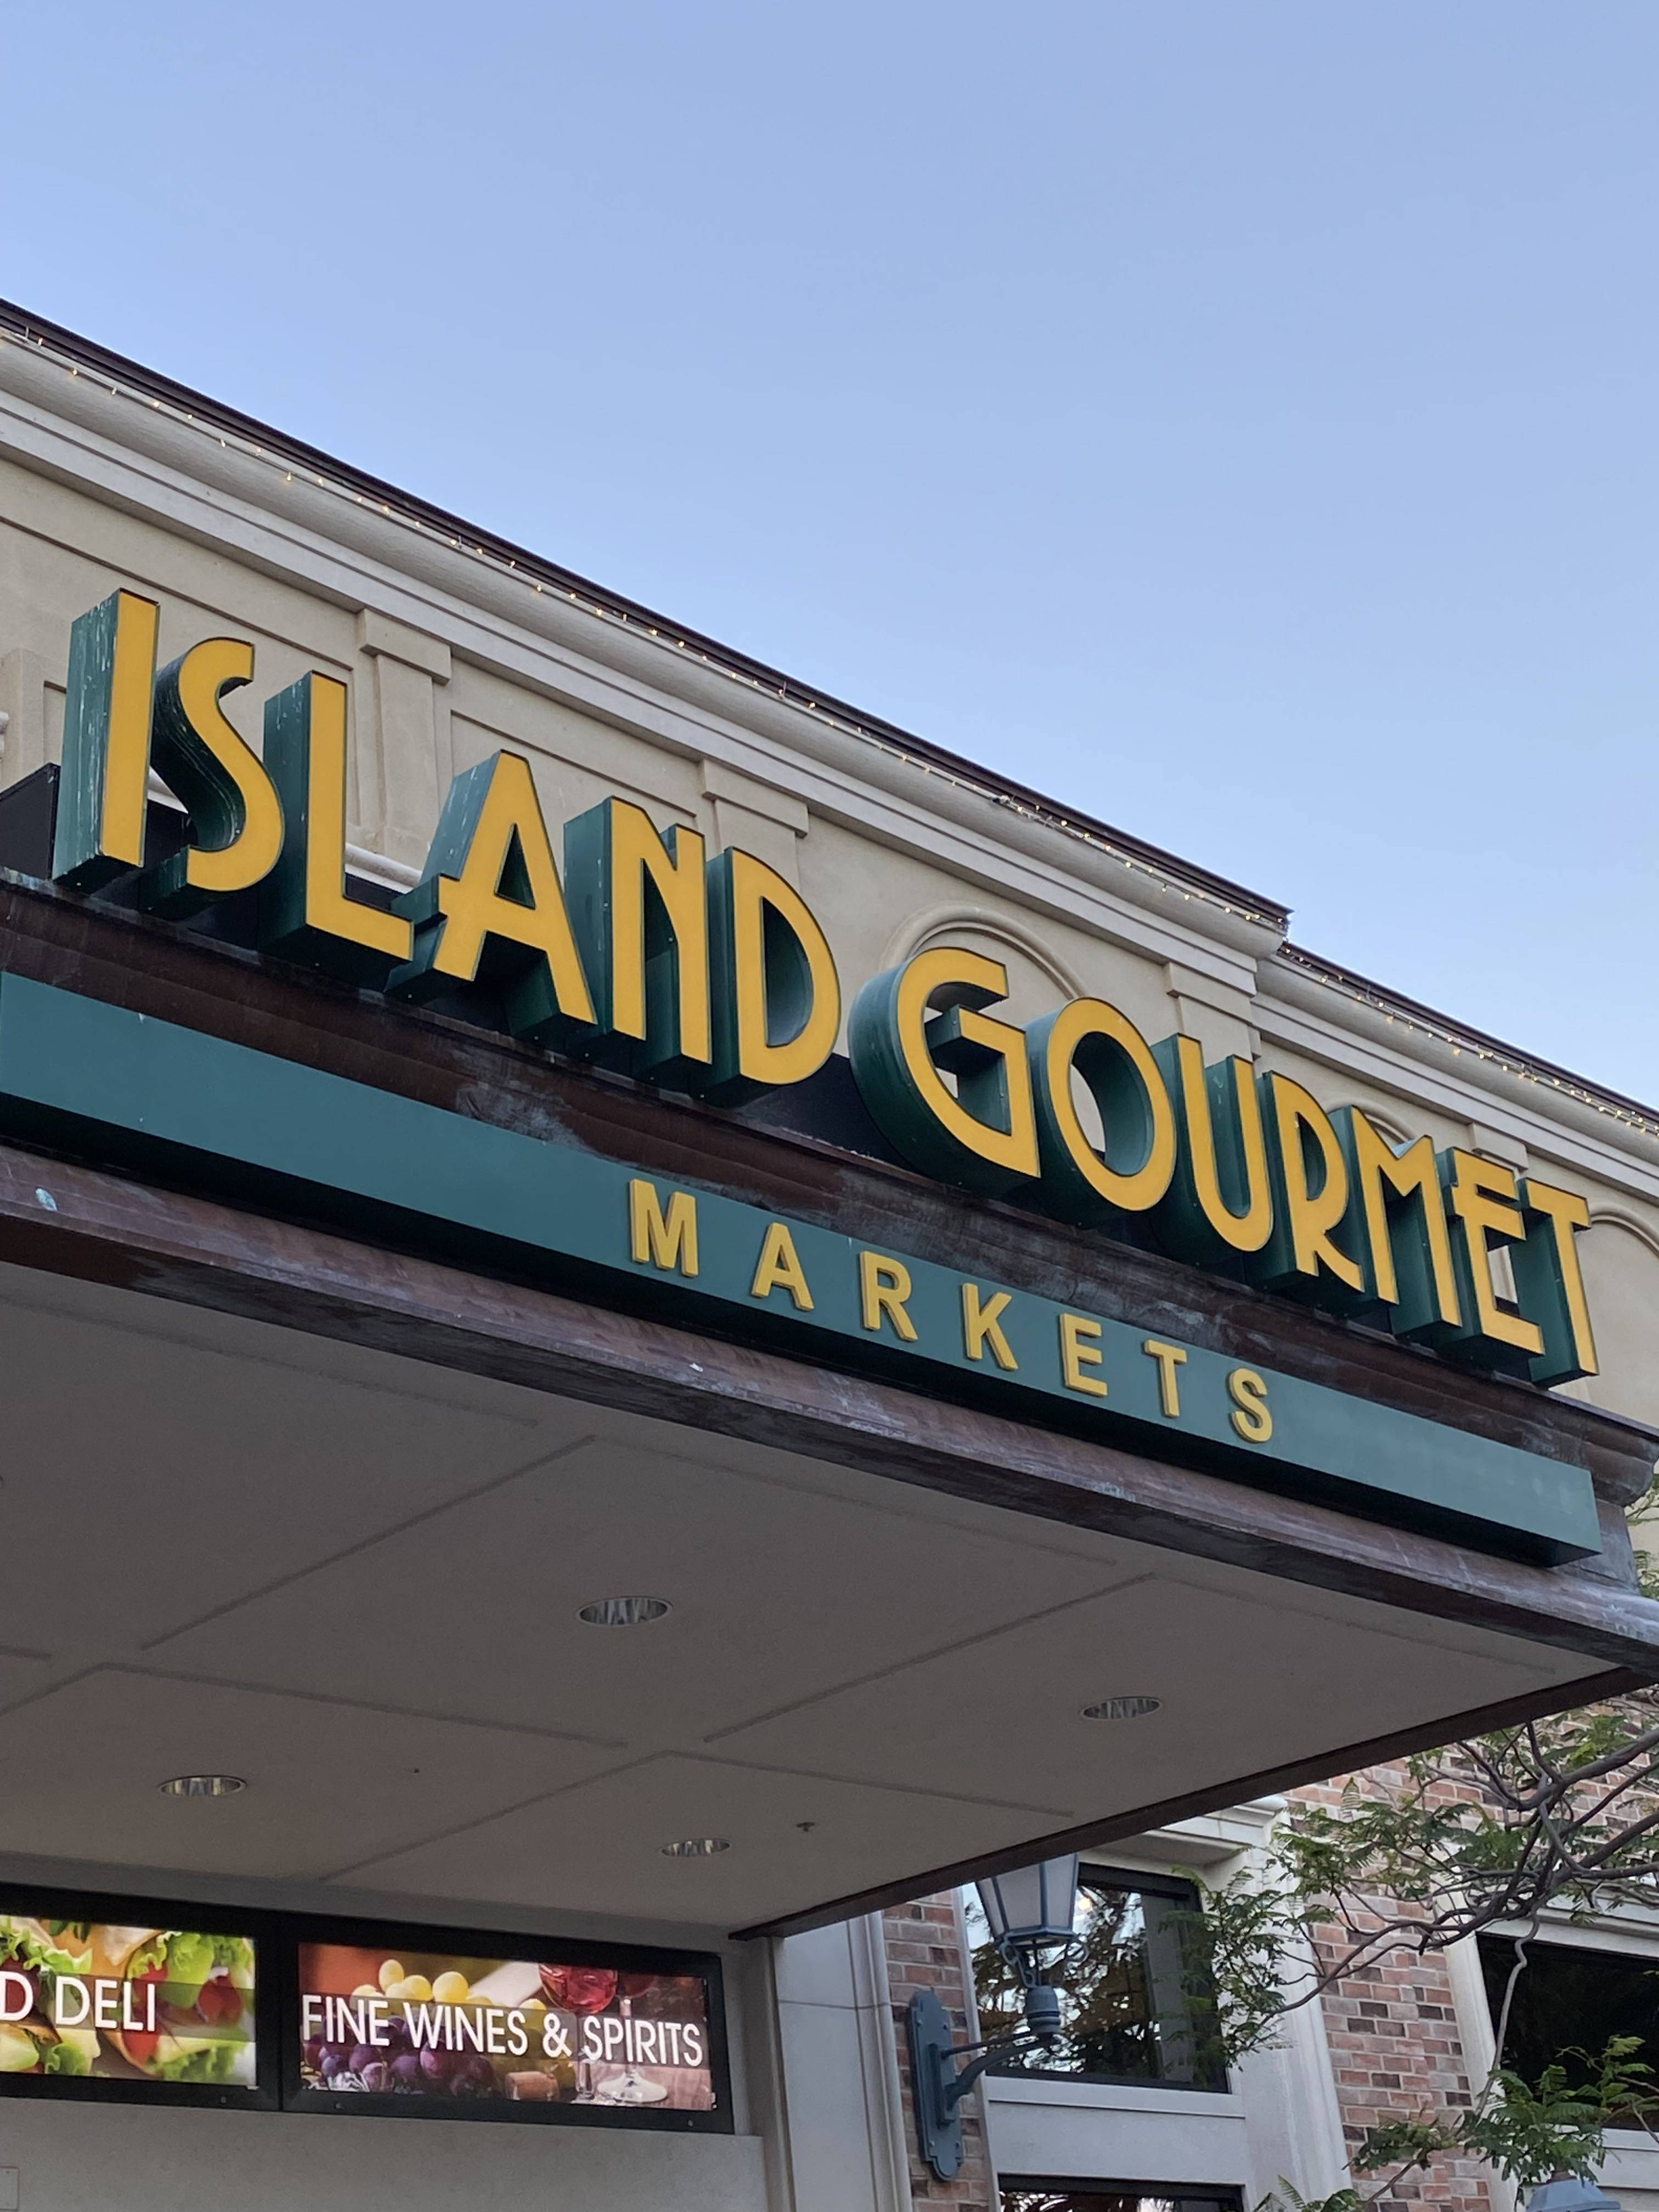 island gourmet market